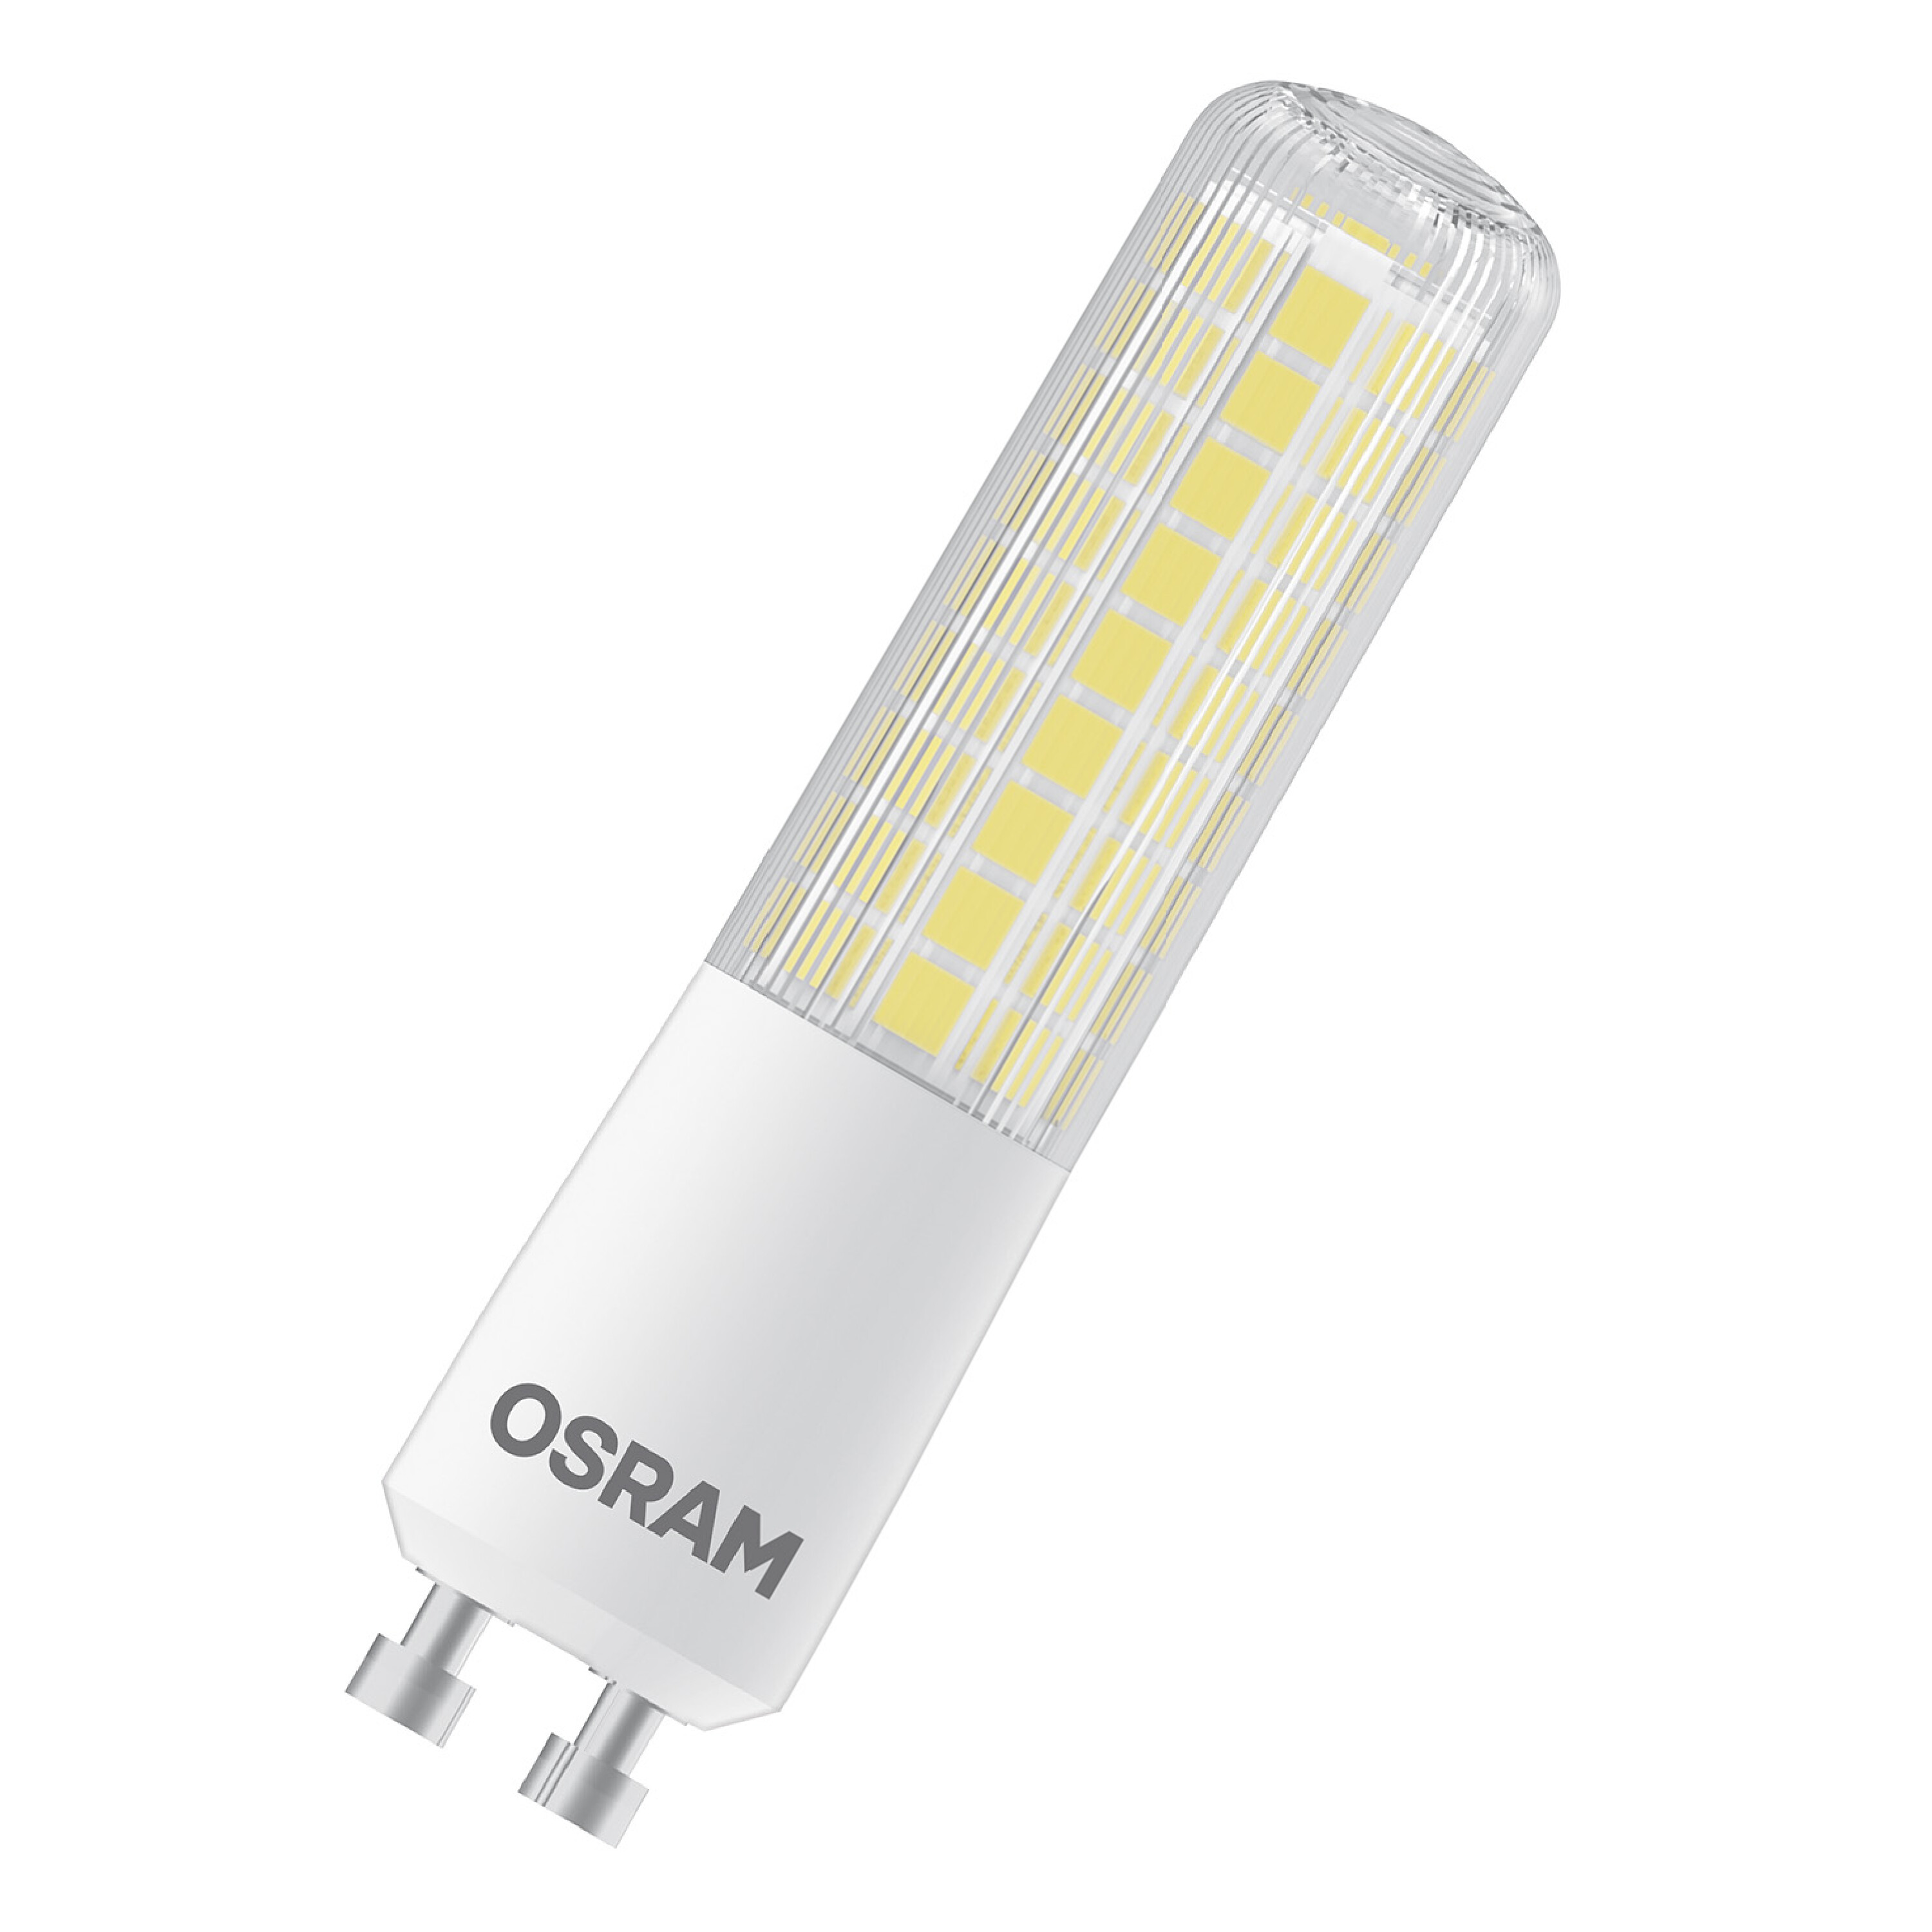 DIM T SPECIAL LED Warmweiß SLIM lumen LED Lampe 806 OSRAM 